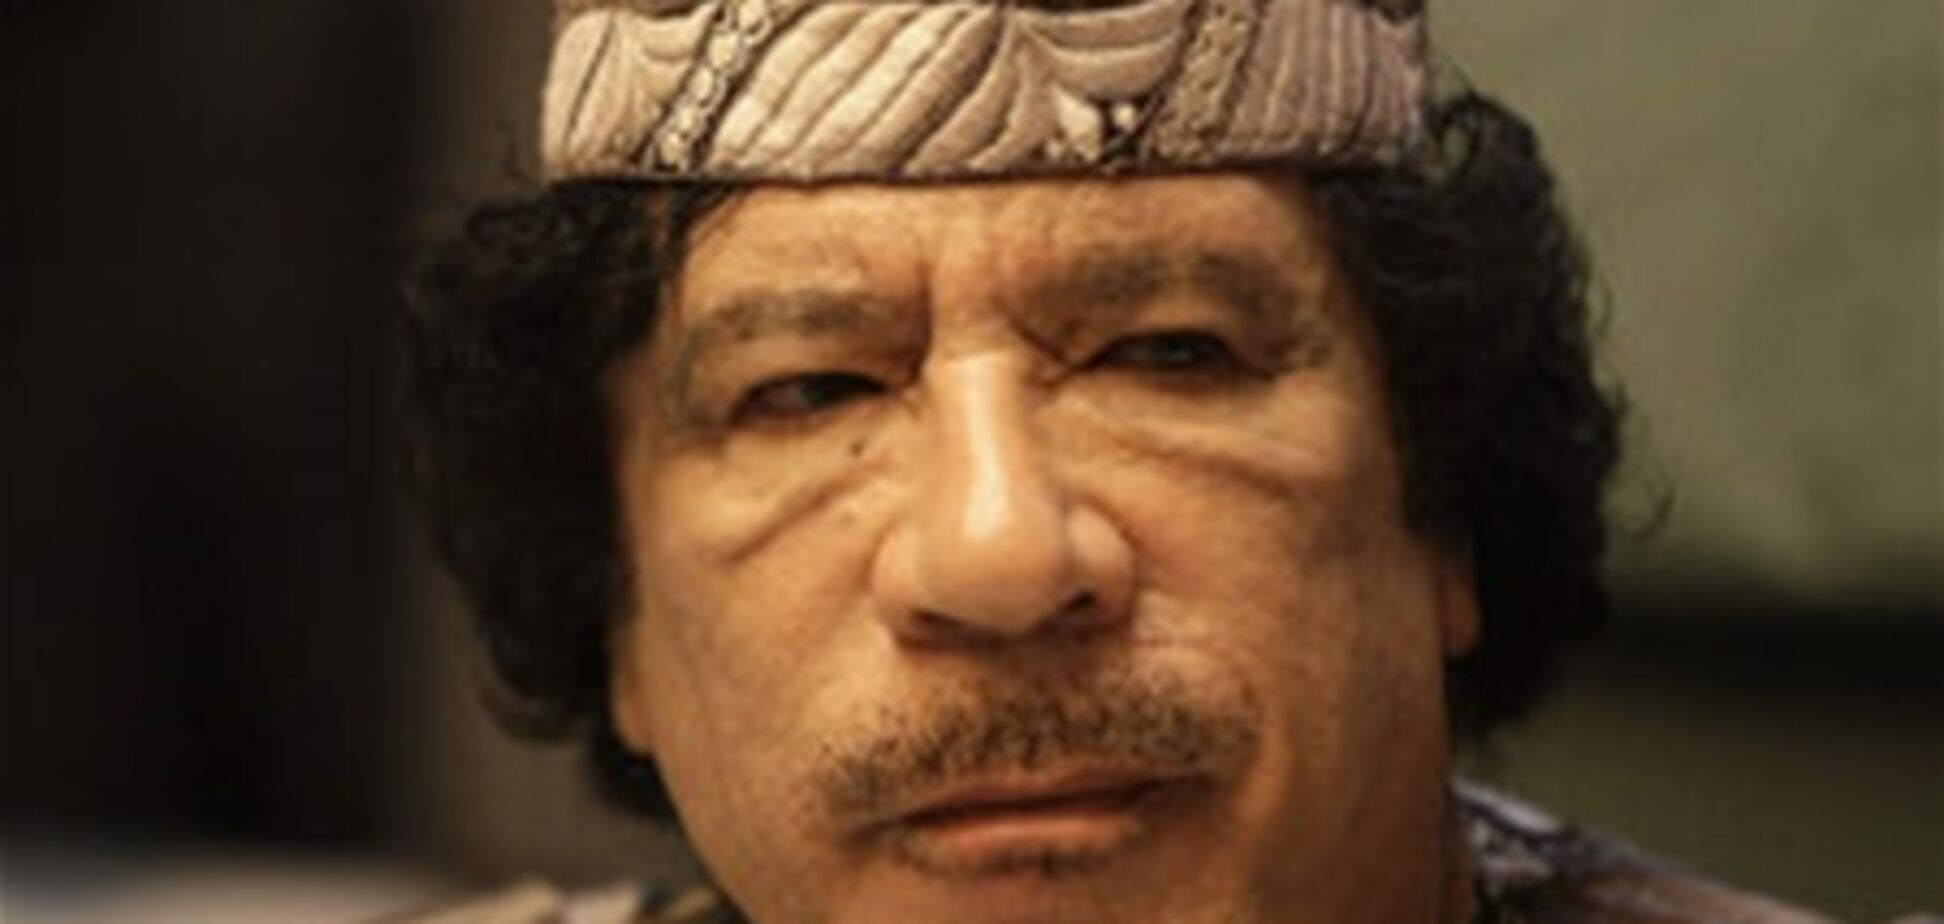 НАТО не возьмет на себя арест Каддафи, но бомбардировку Ливии продолжит